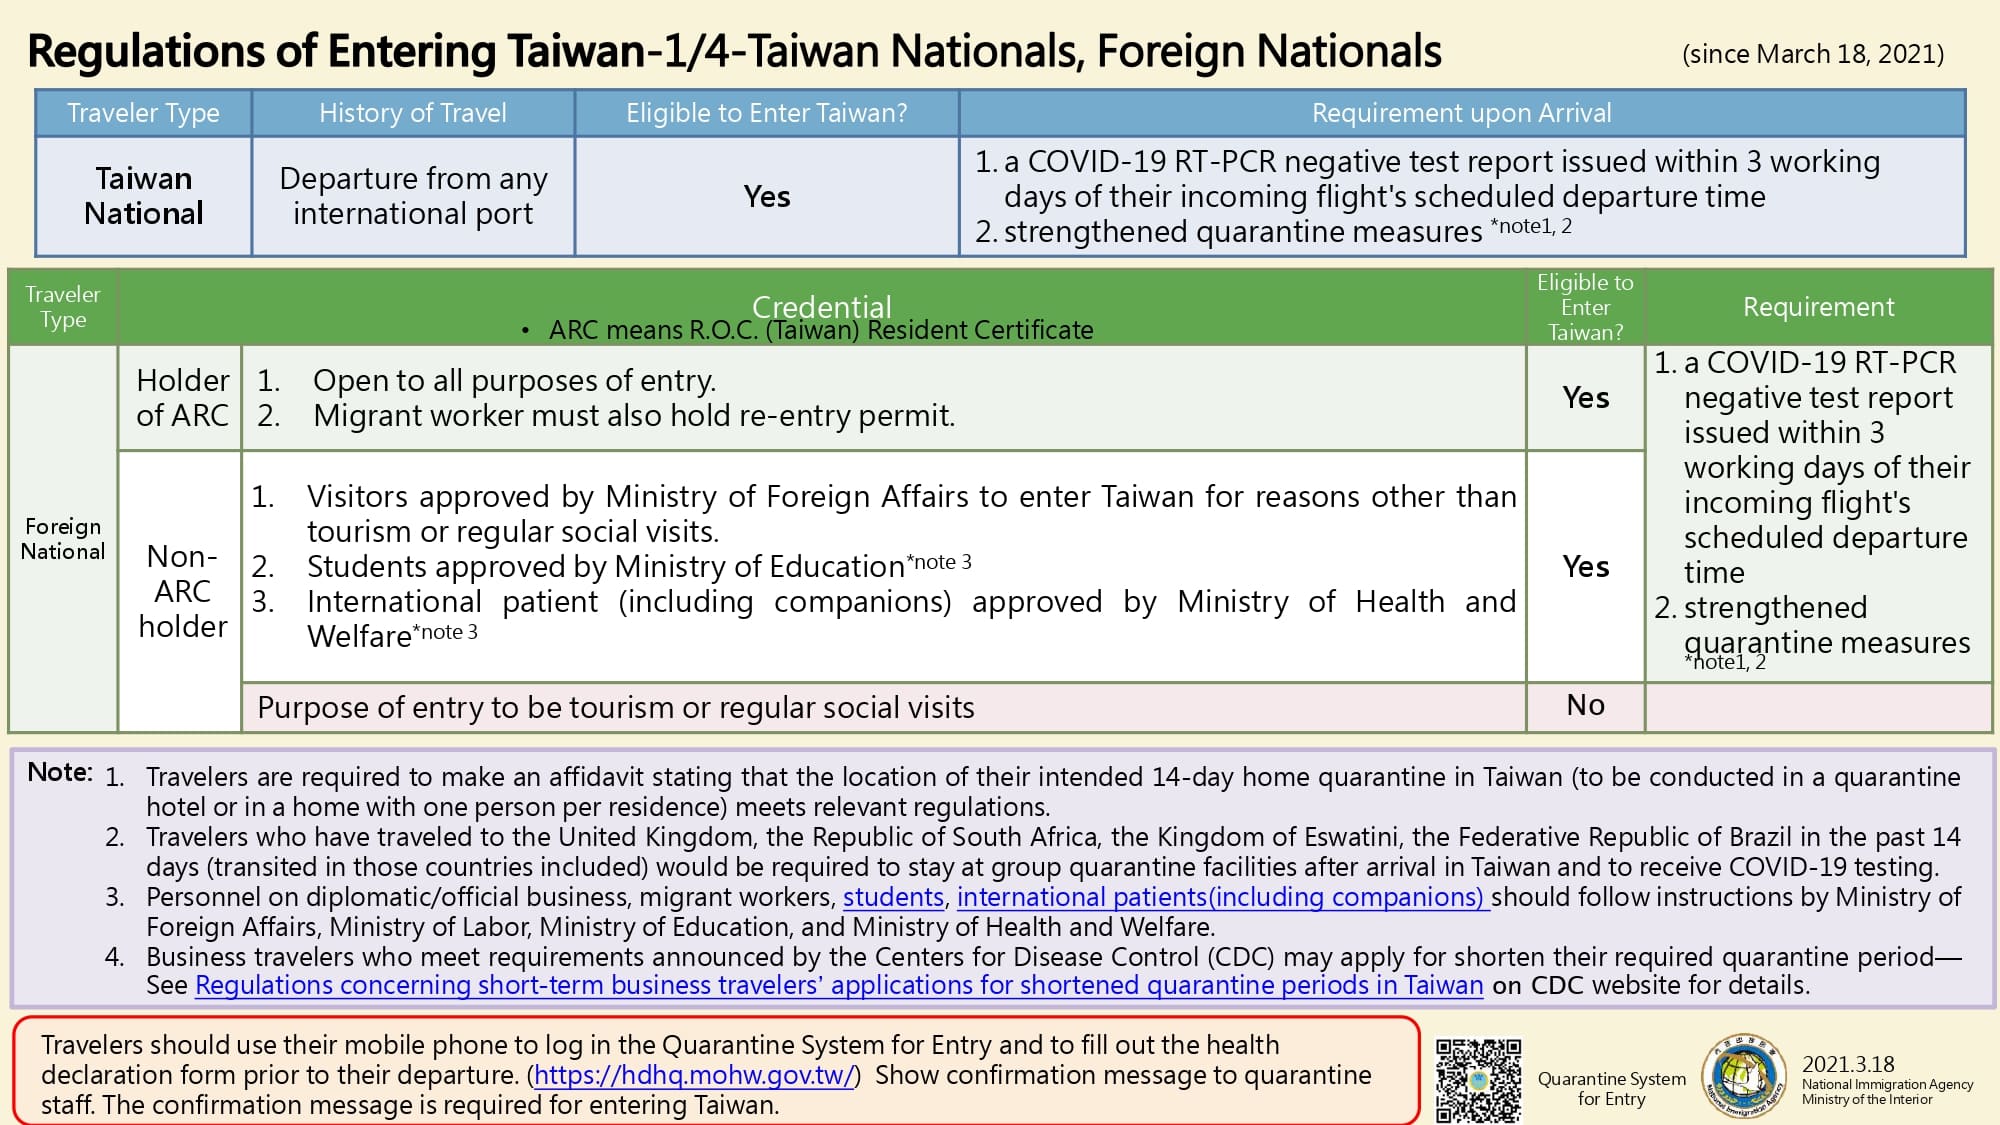 Regulations of Entering Taiwan (1100318)